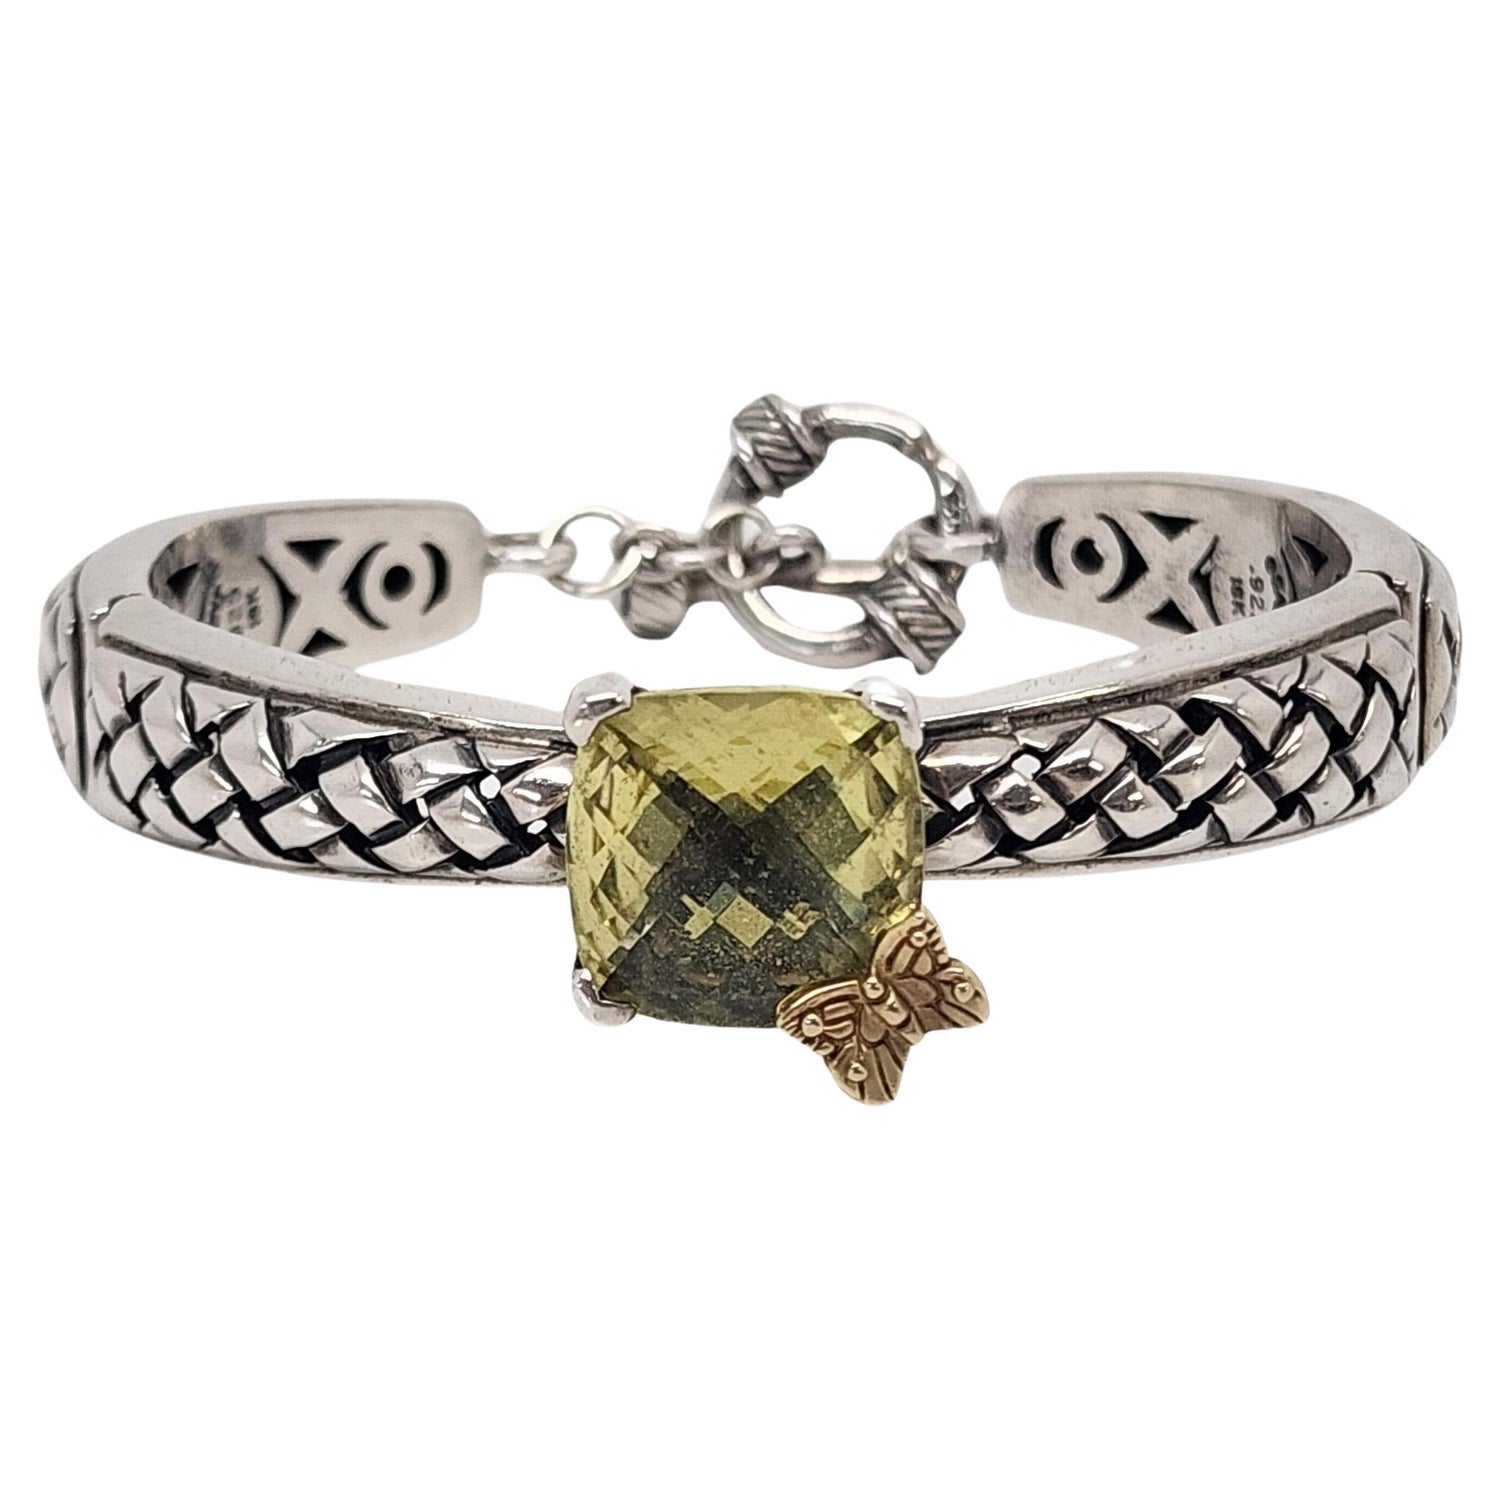 Gold Ladybug Bracelet With Silver Chain - Saint By Sarah Jane